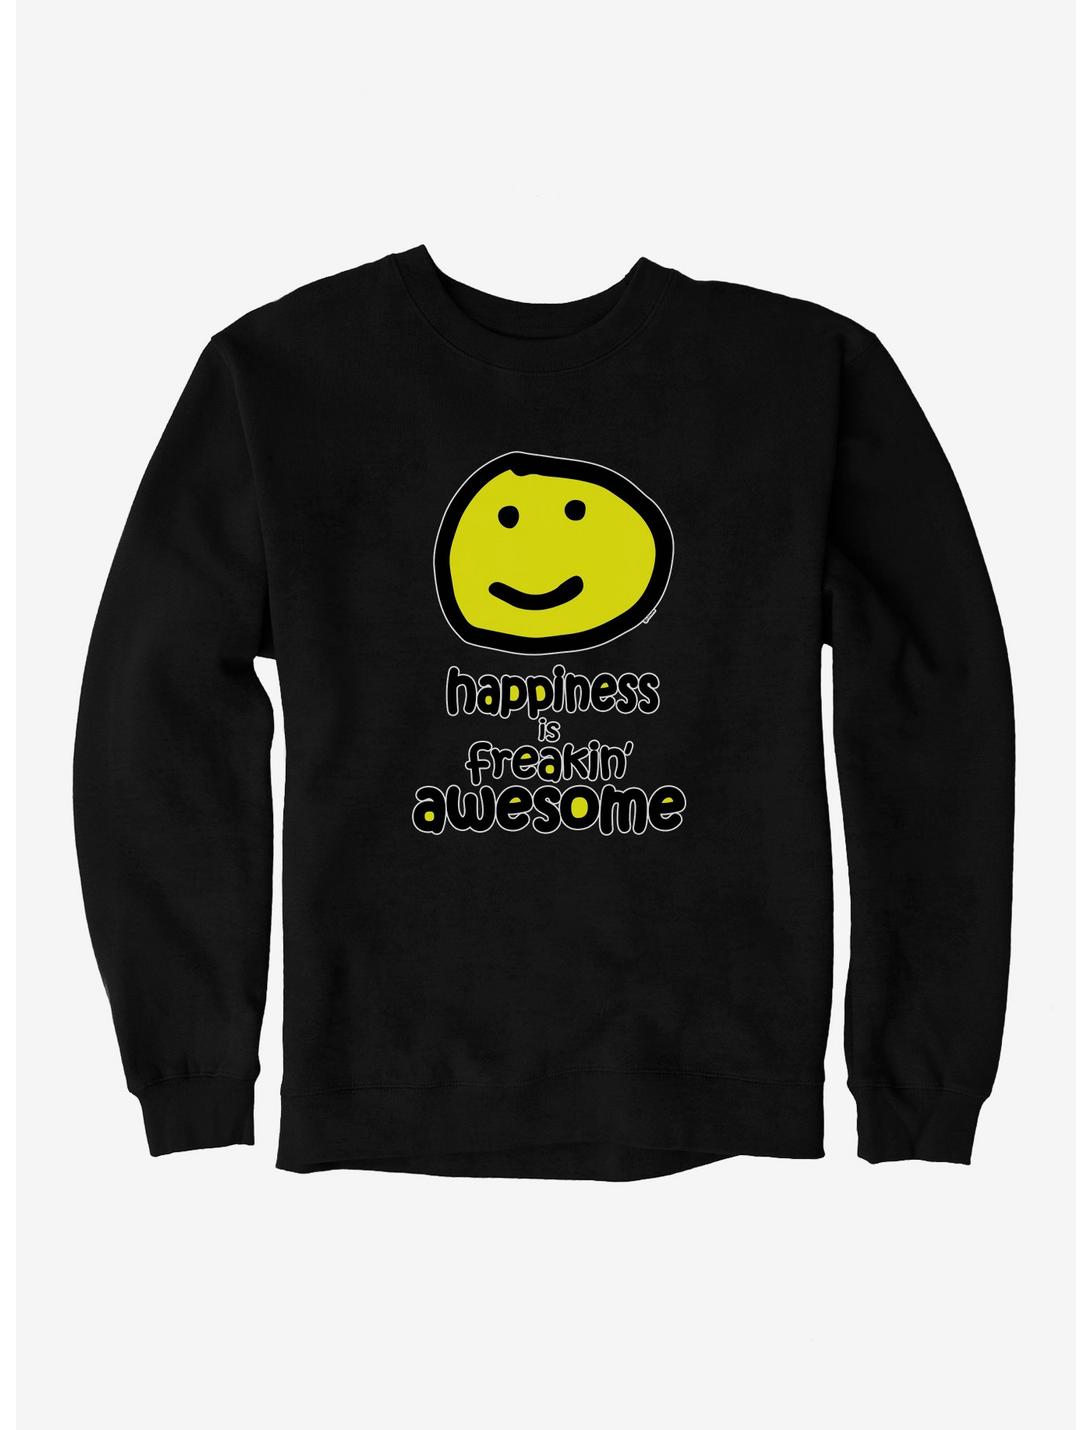 ICreate Awesome Sweatshirt, , hi-res